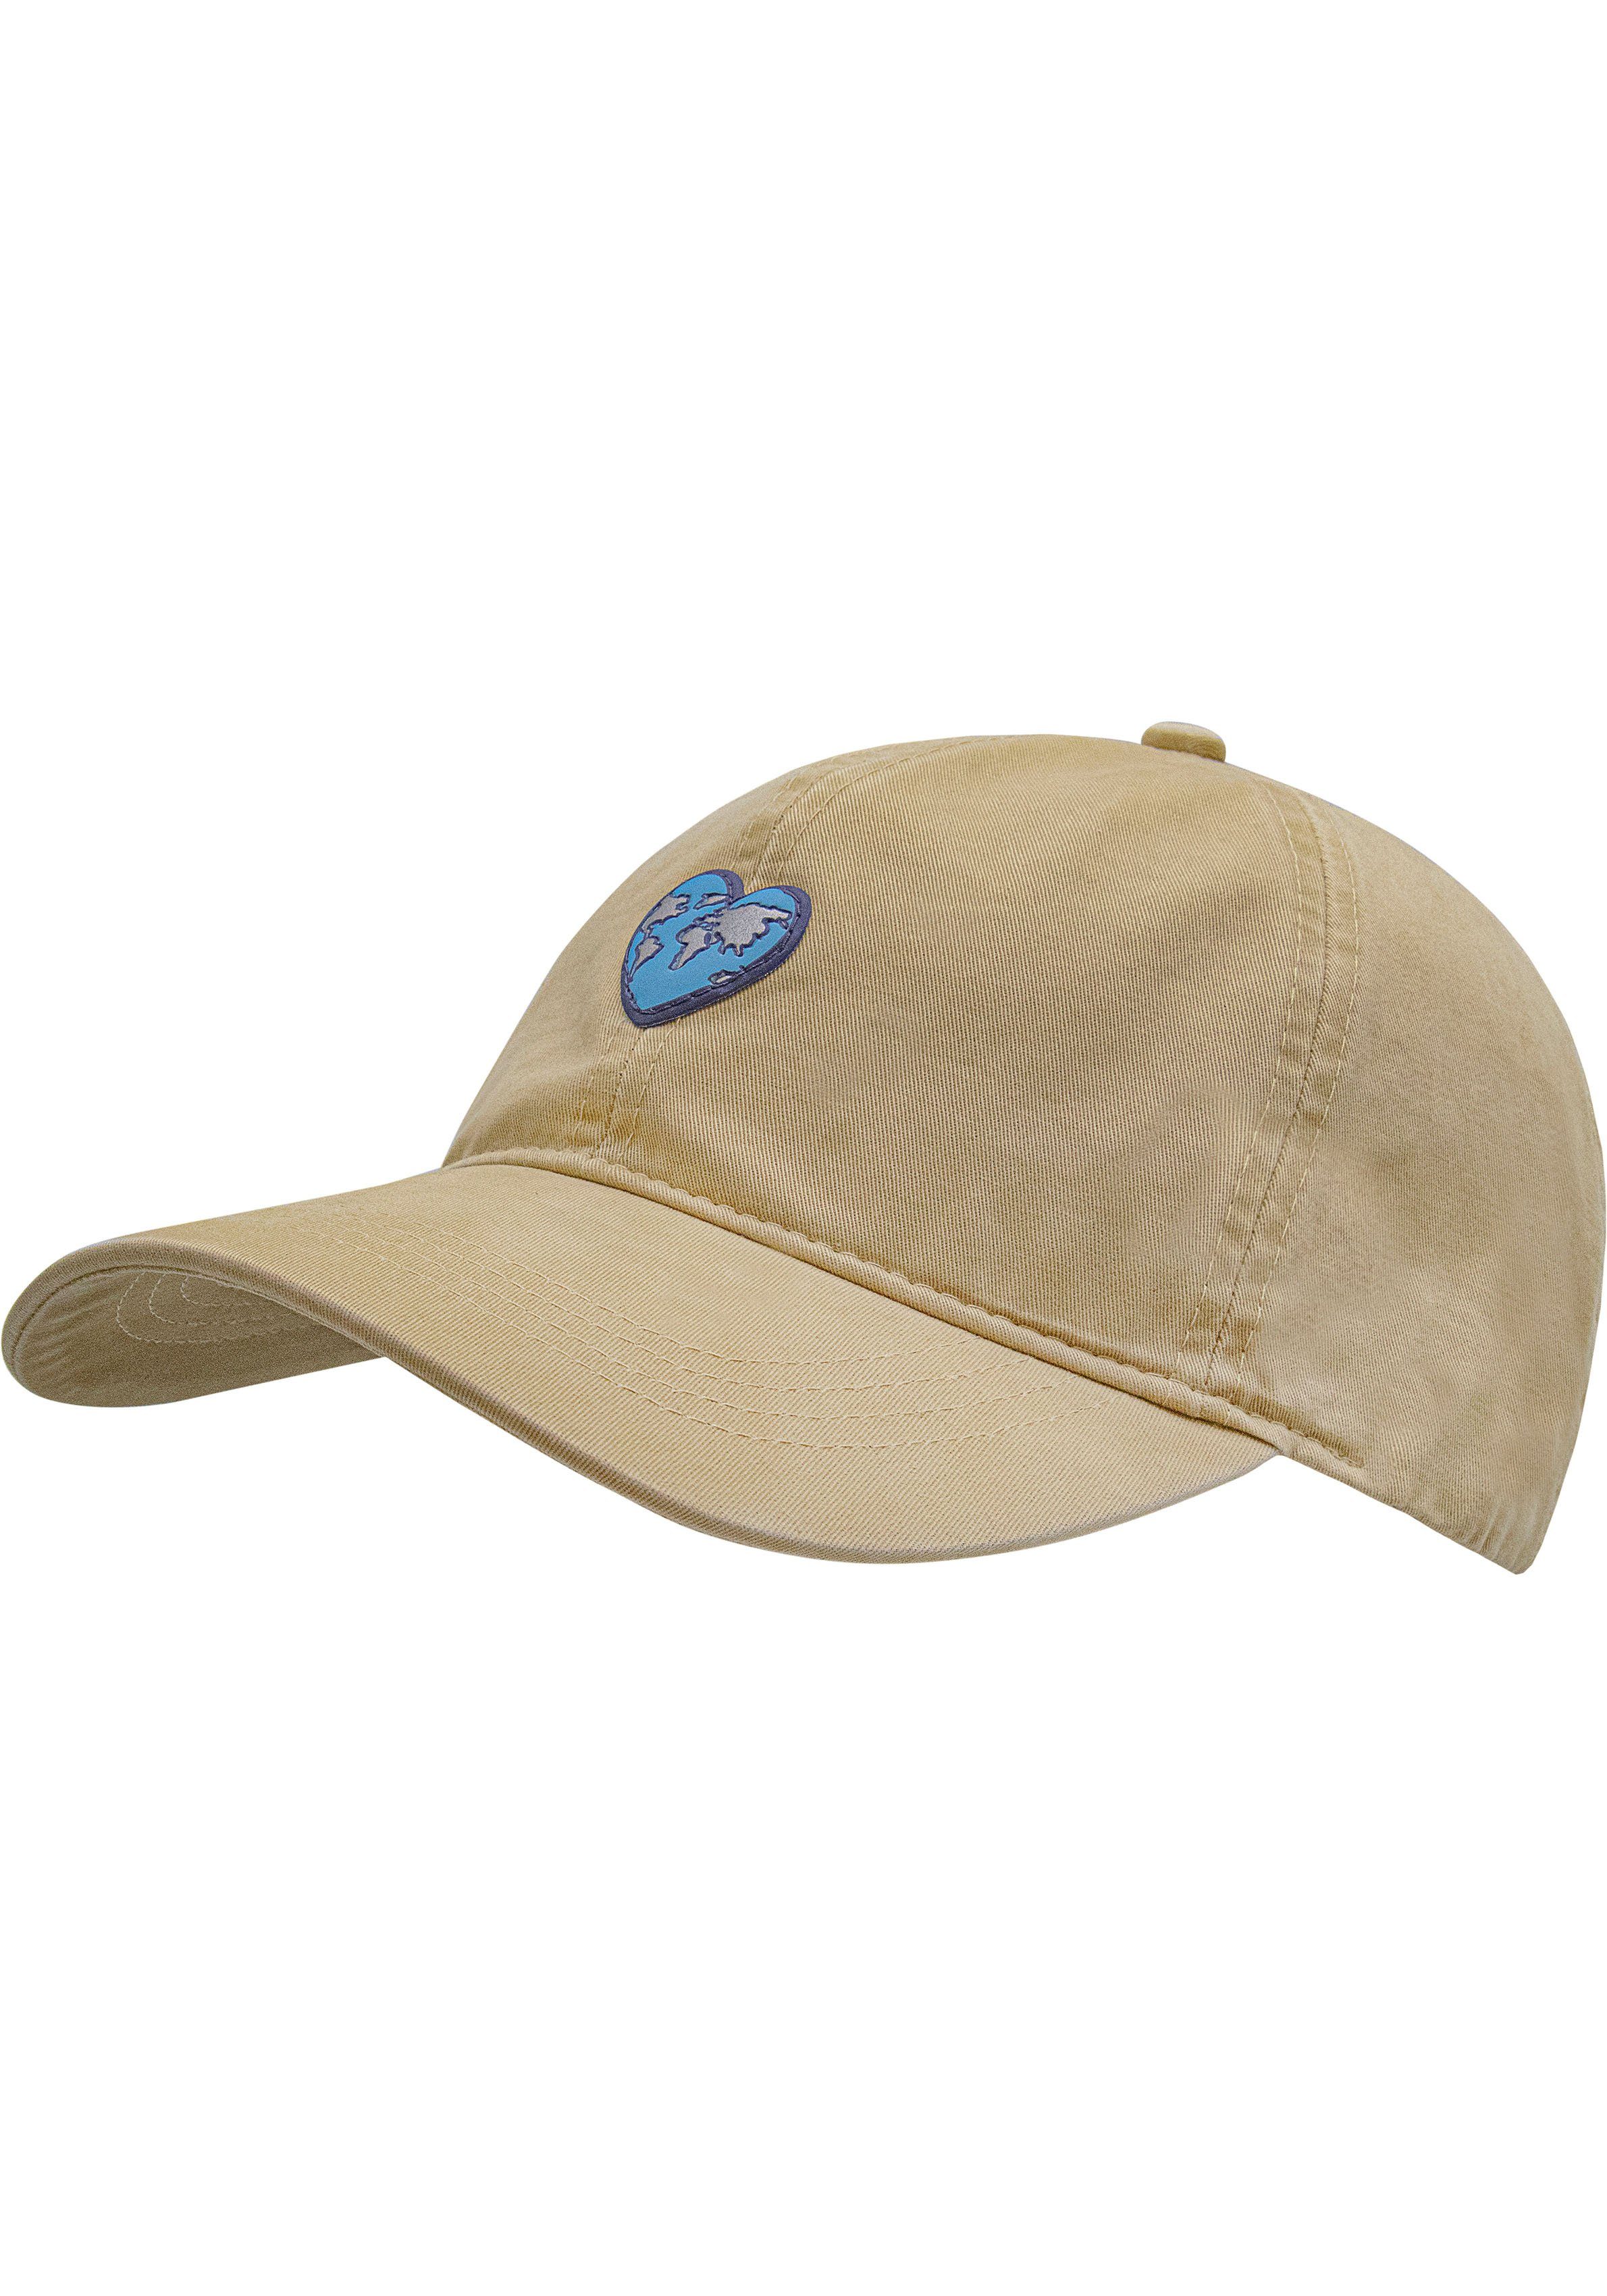 chillouts Baseball Cap beige Veracruz Hat